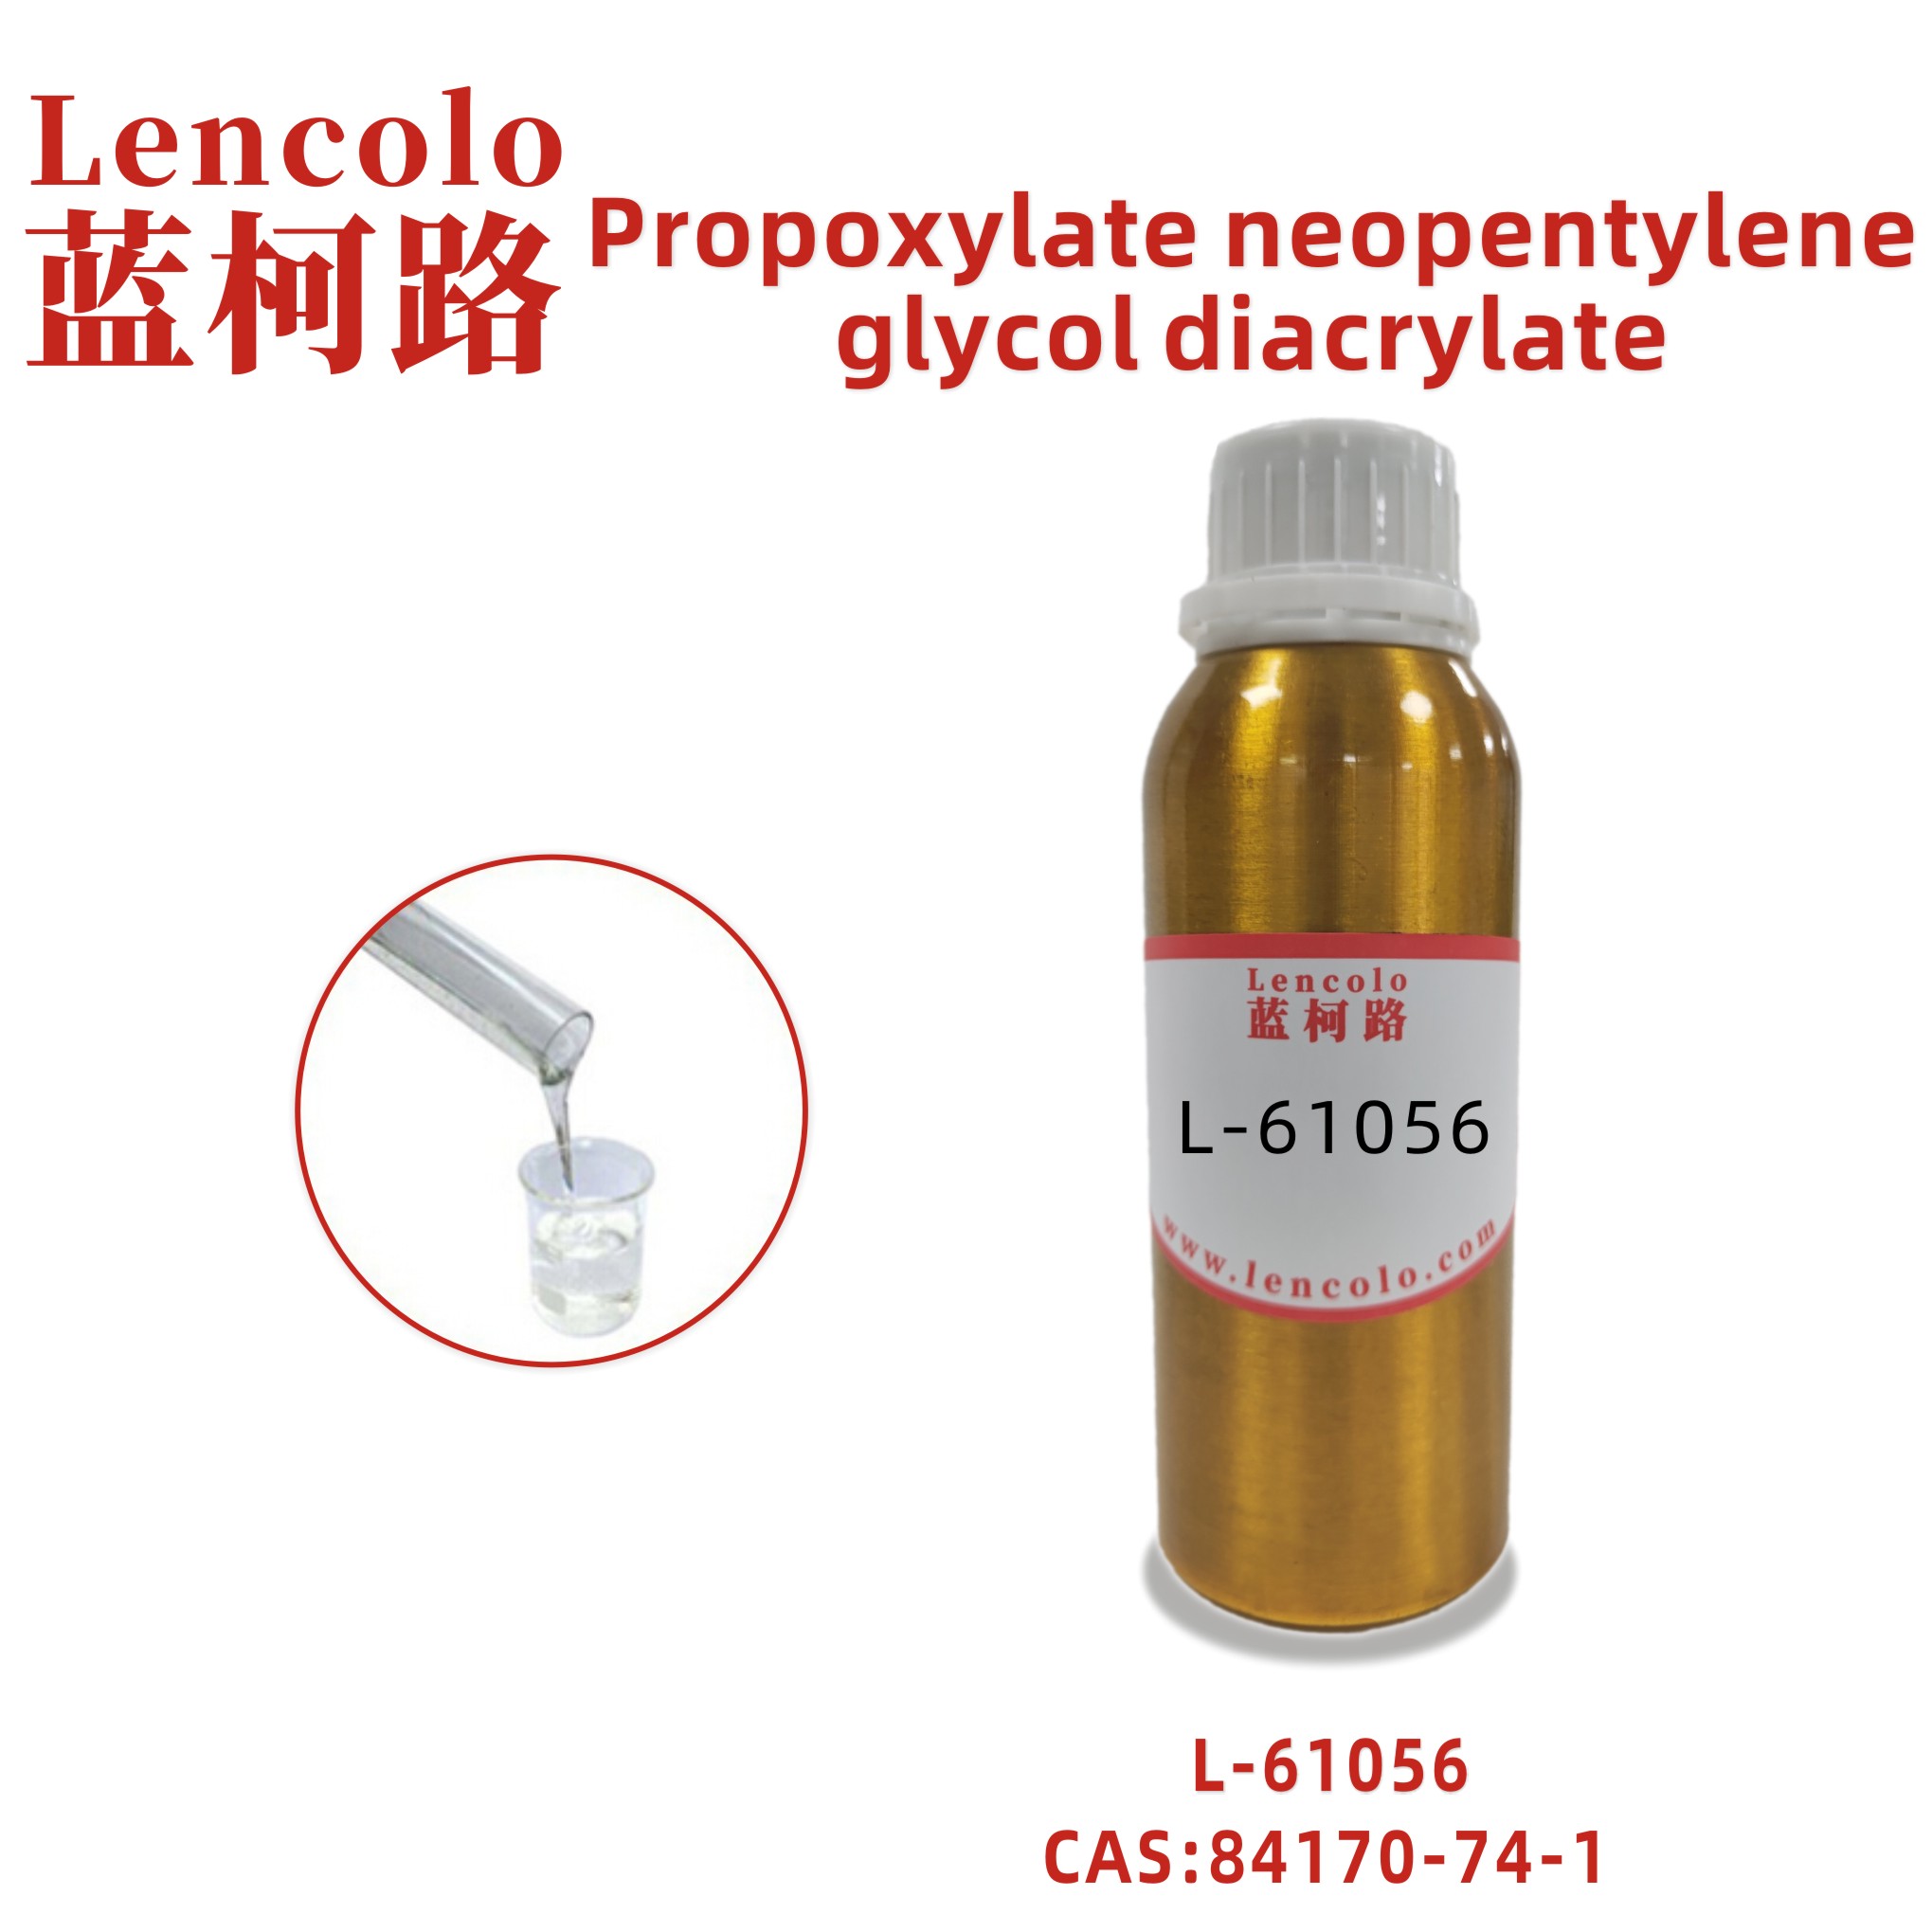 L-61056 Propoxylate neopentylene glycol diacrylate for UV coatings, UV 3D printing inks